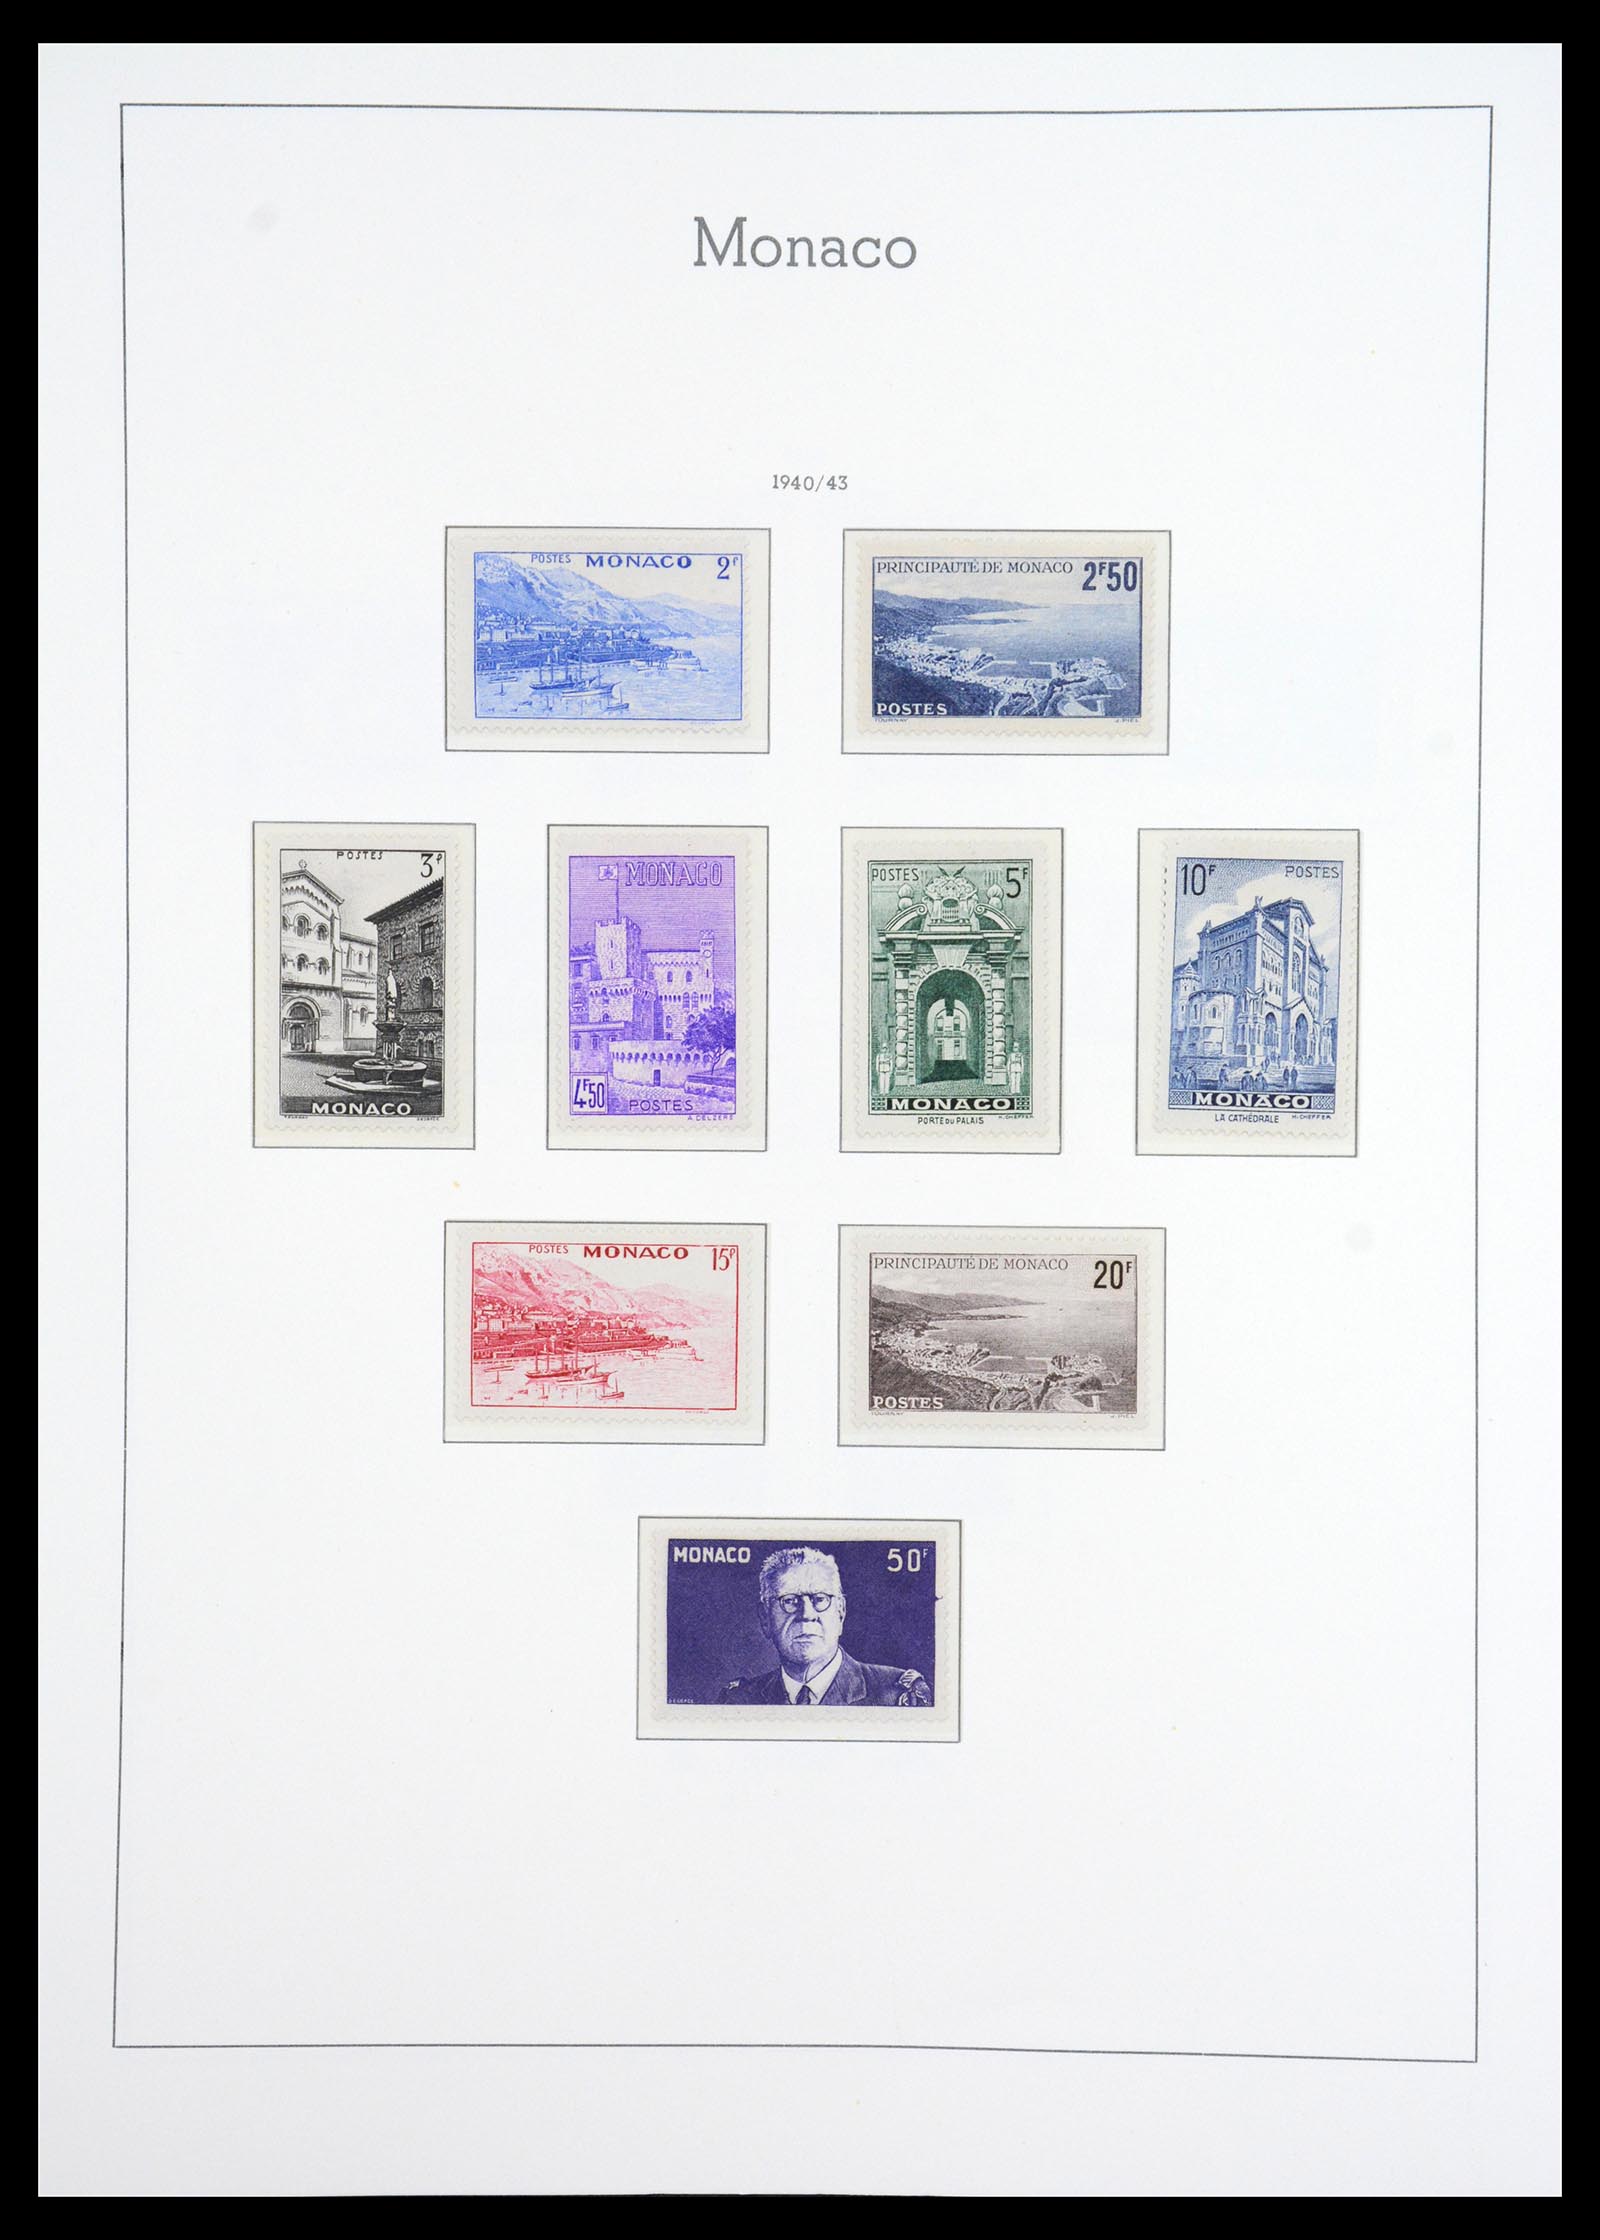 36735 020 - Stamp collection 36735 Monaco 1885-1966.